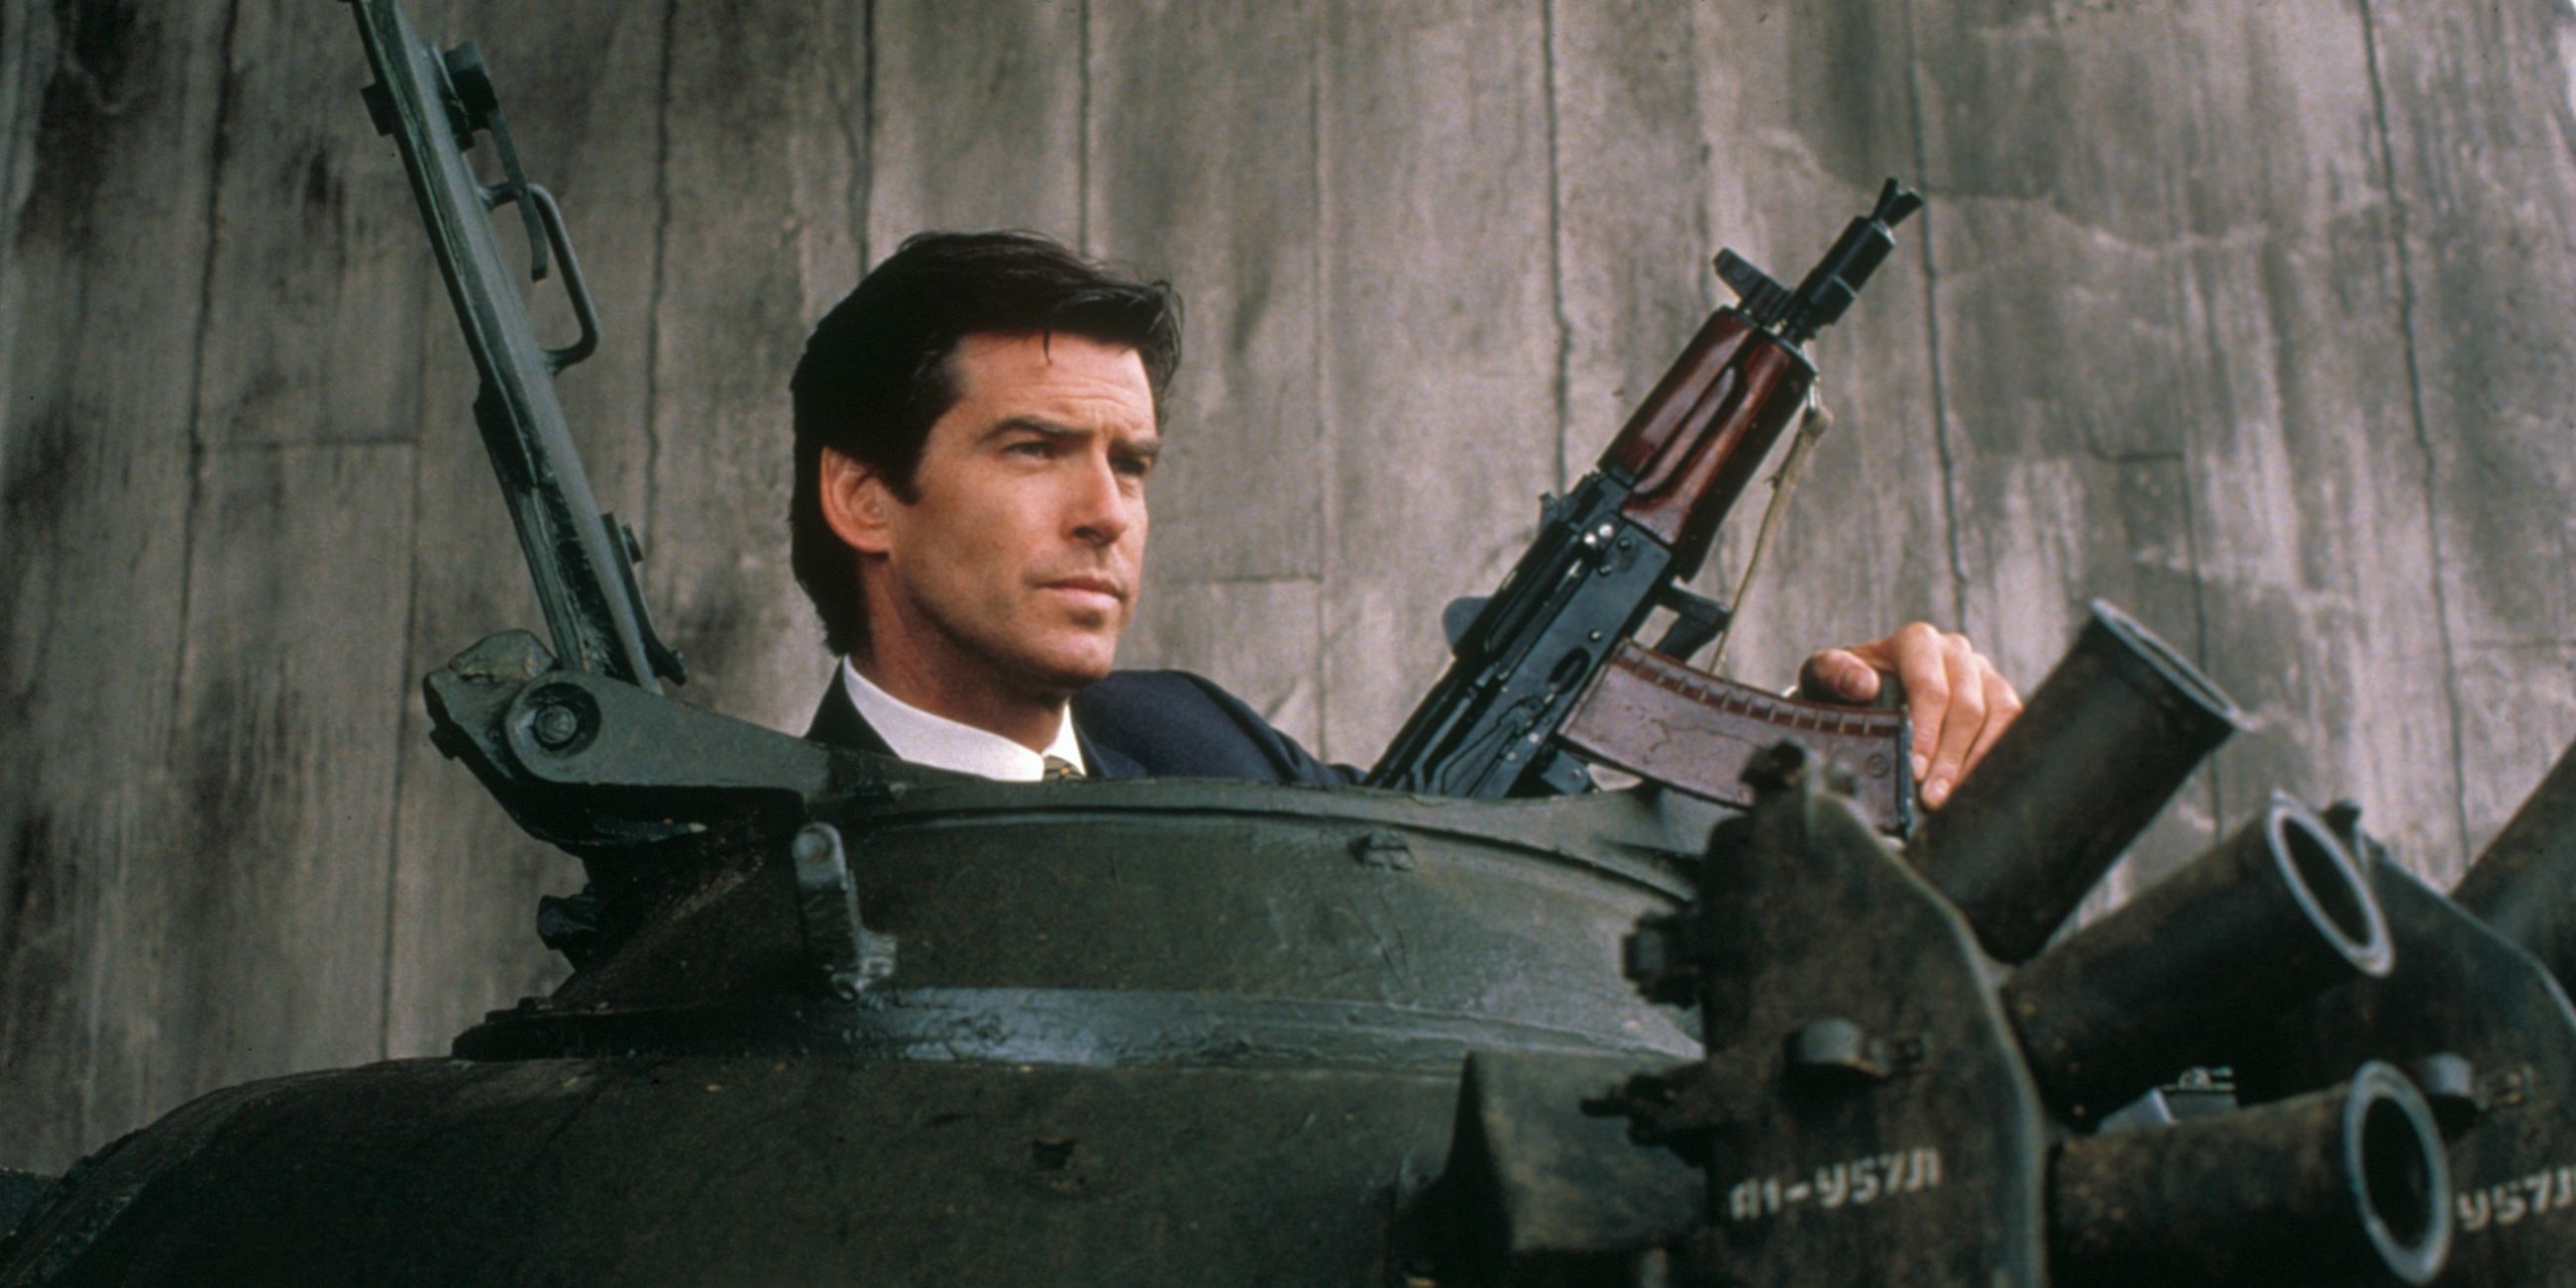 Pierce Brosnan as James Bond with a pile of guns